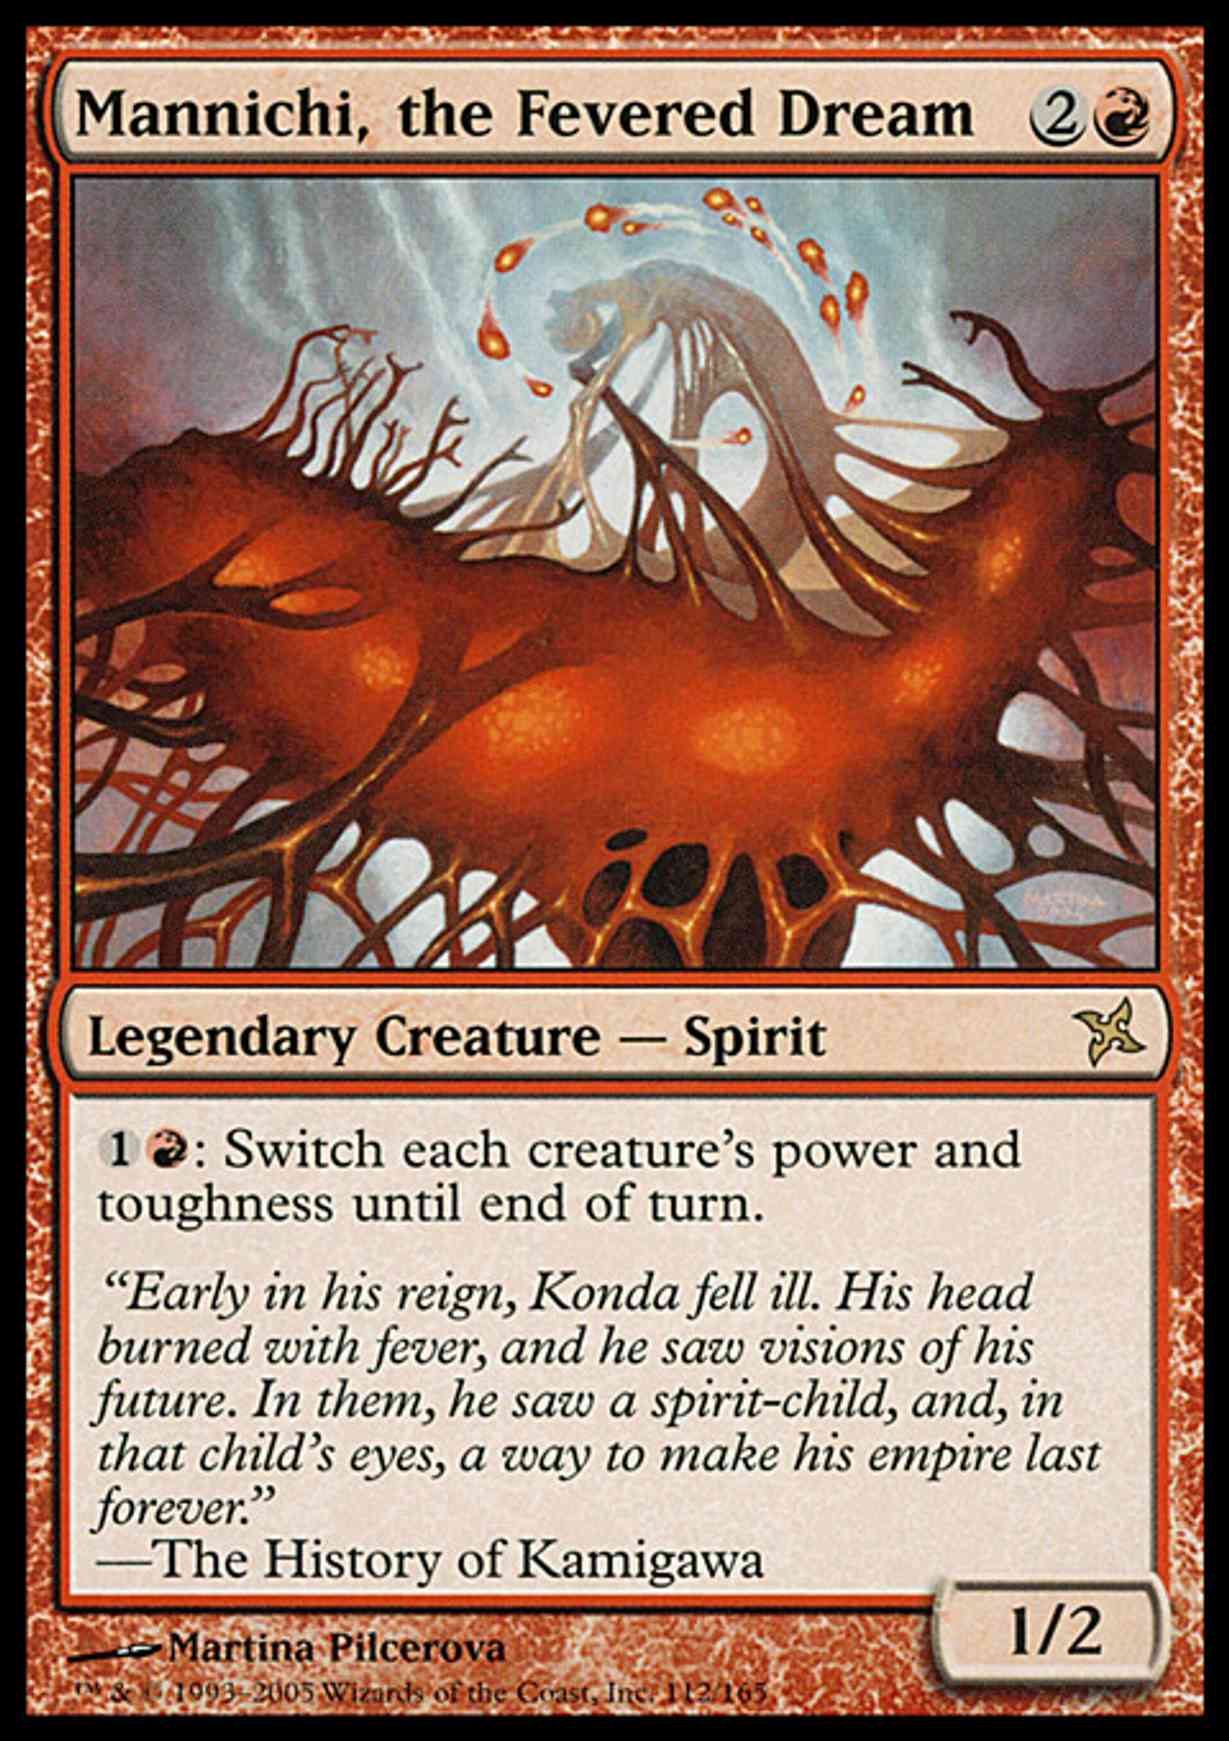 Mannichi, the Fevered Dream magic card front